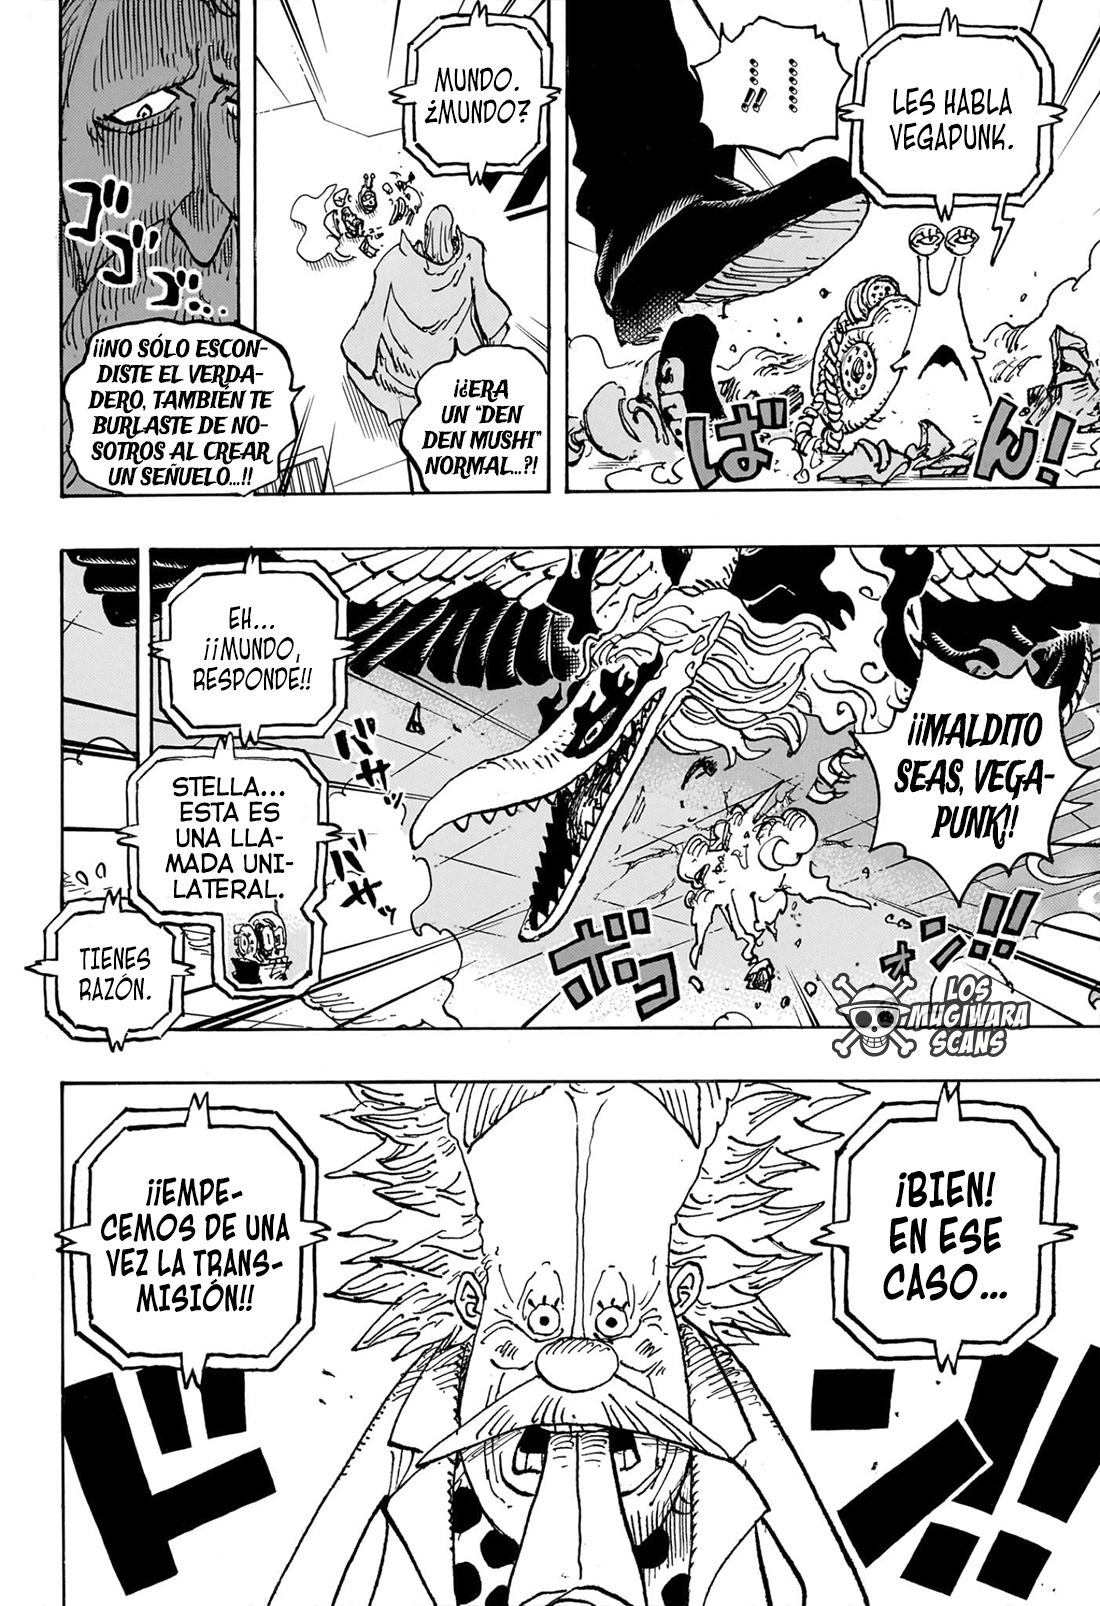 español - One Piece Manga 1113 [Español] 05